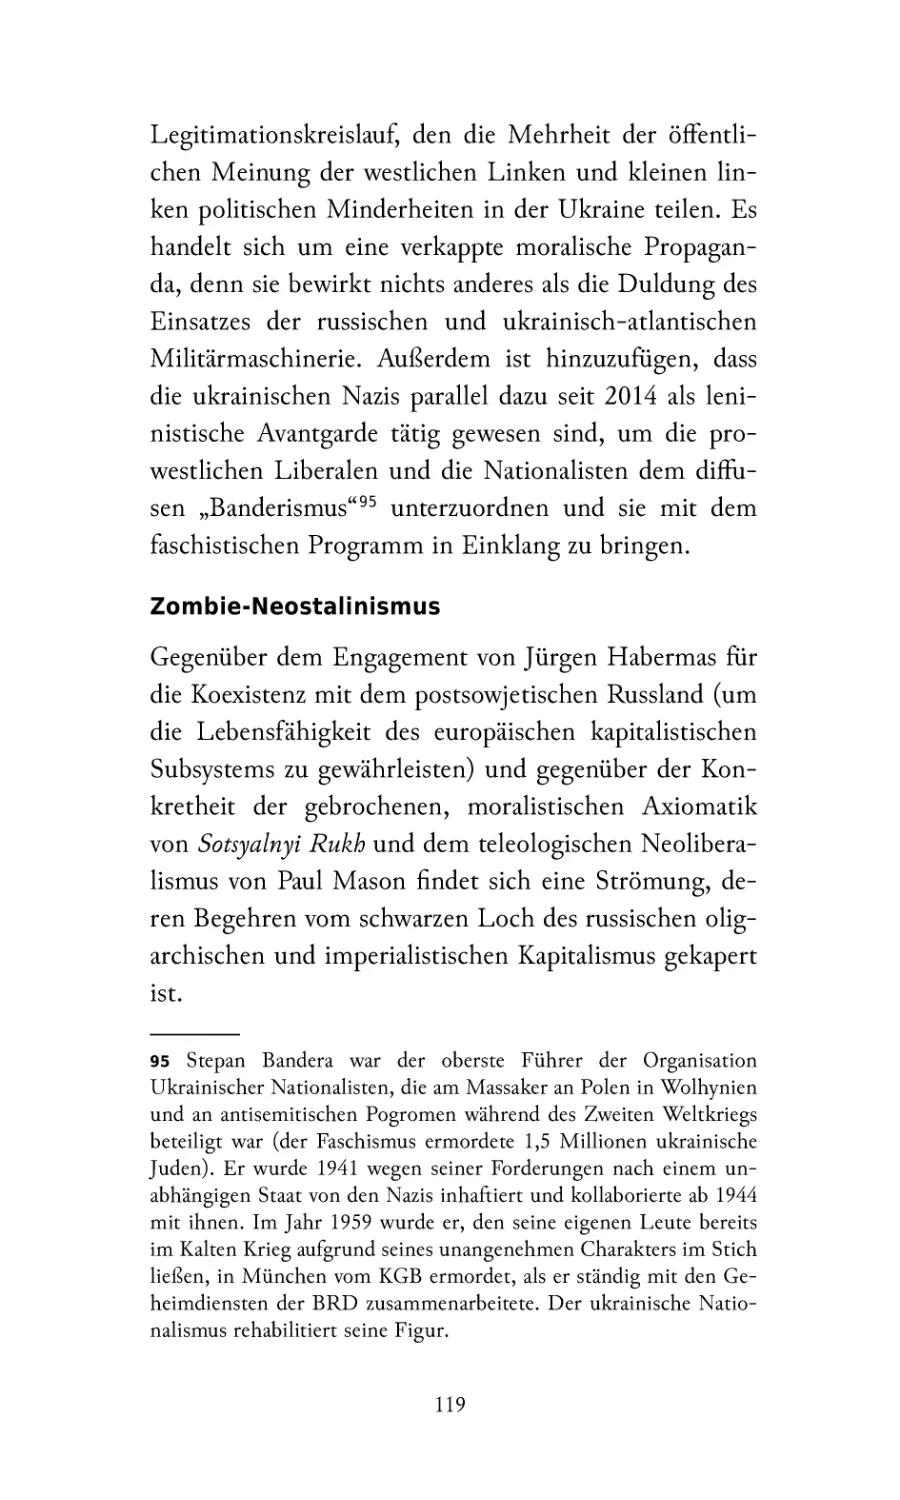 Zombie-Neostalinismus